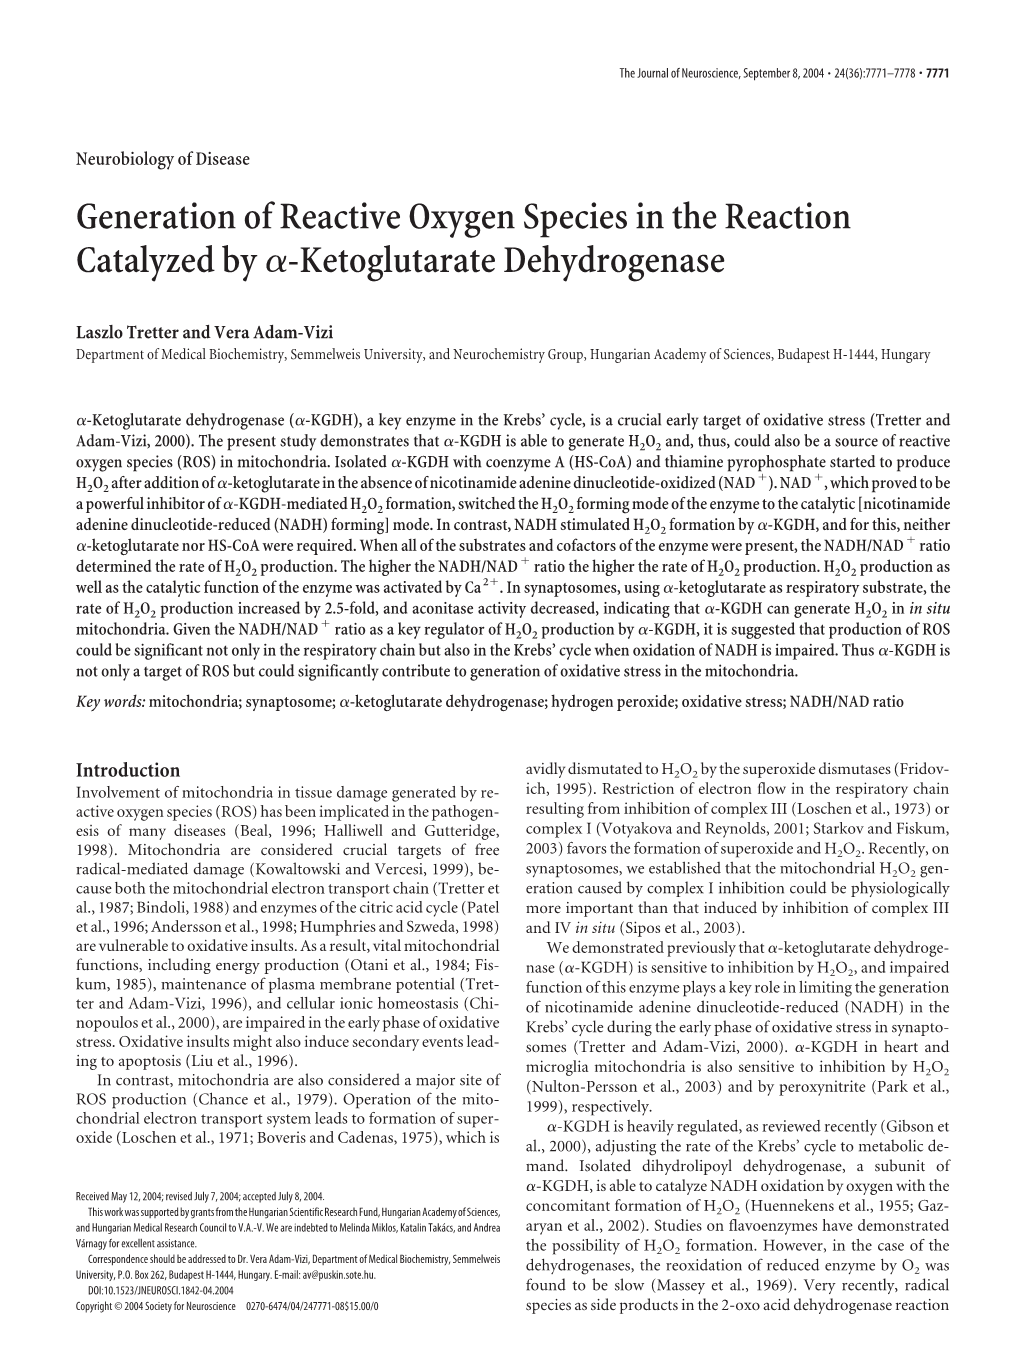 Generation of Reactive Oxygen Species in the Reaction Catalyzed by ␣-Ketoglutarate Dehydrogenase